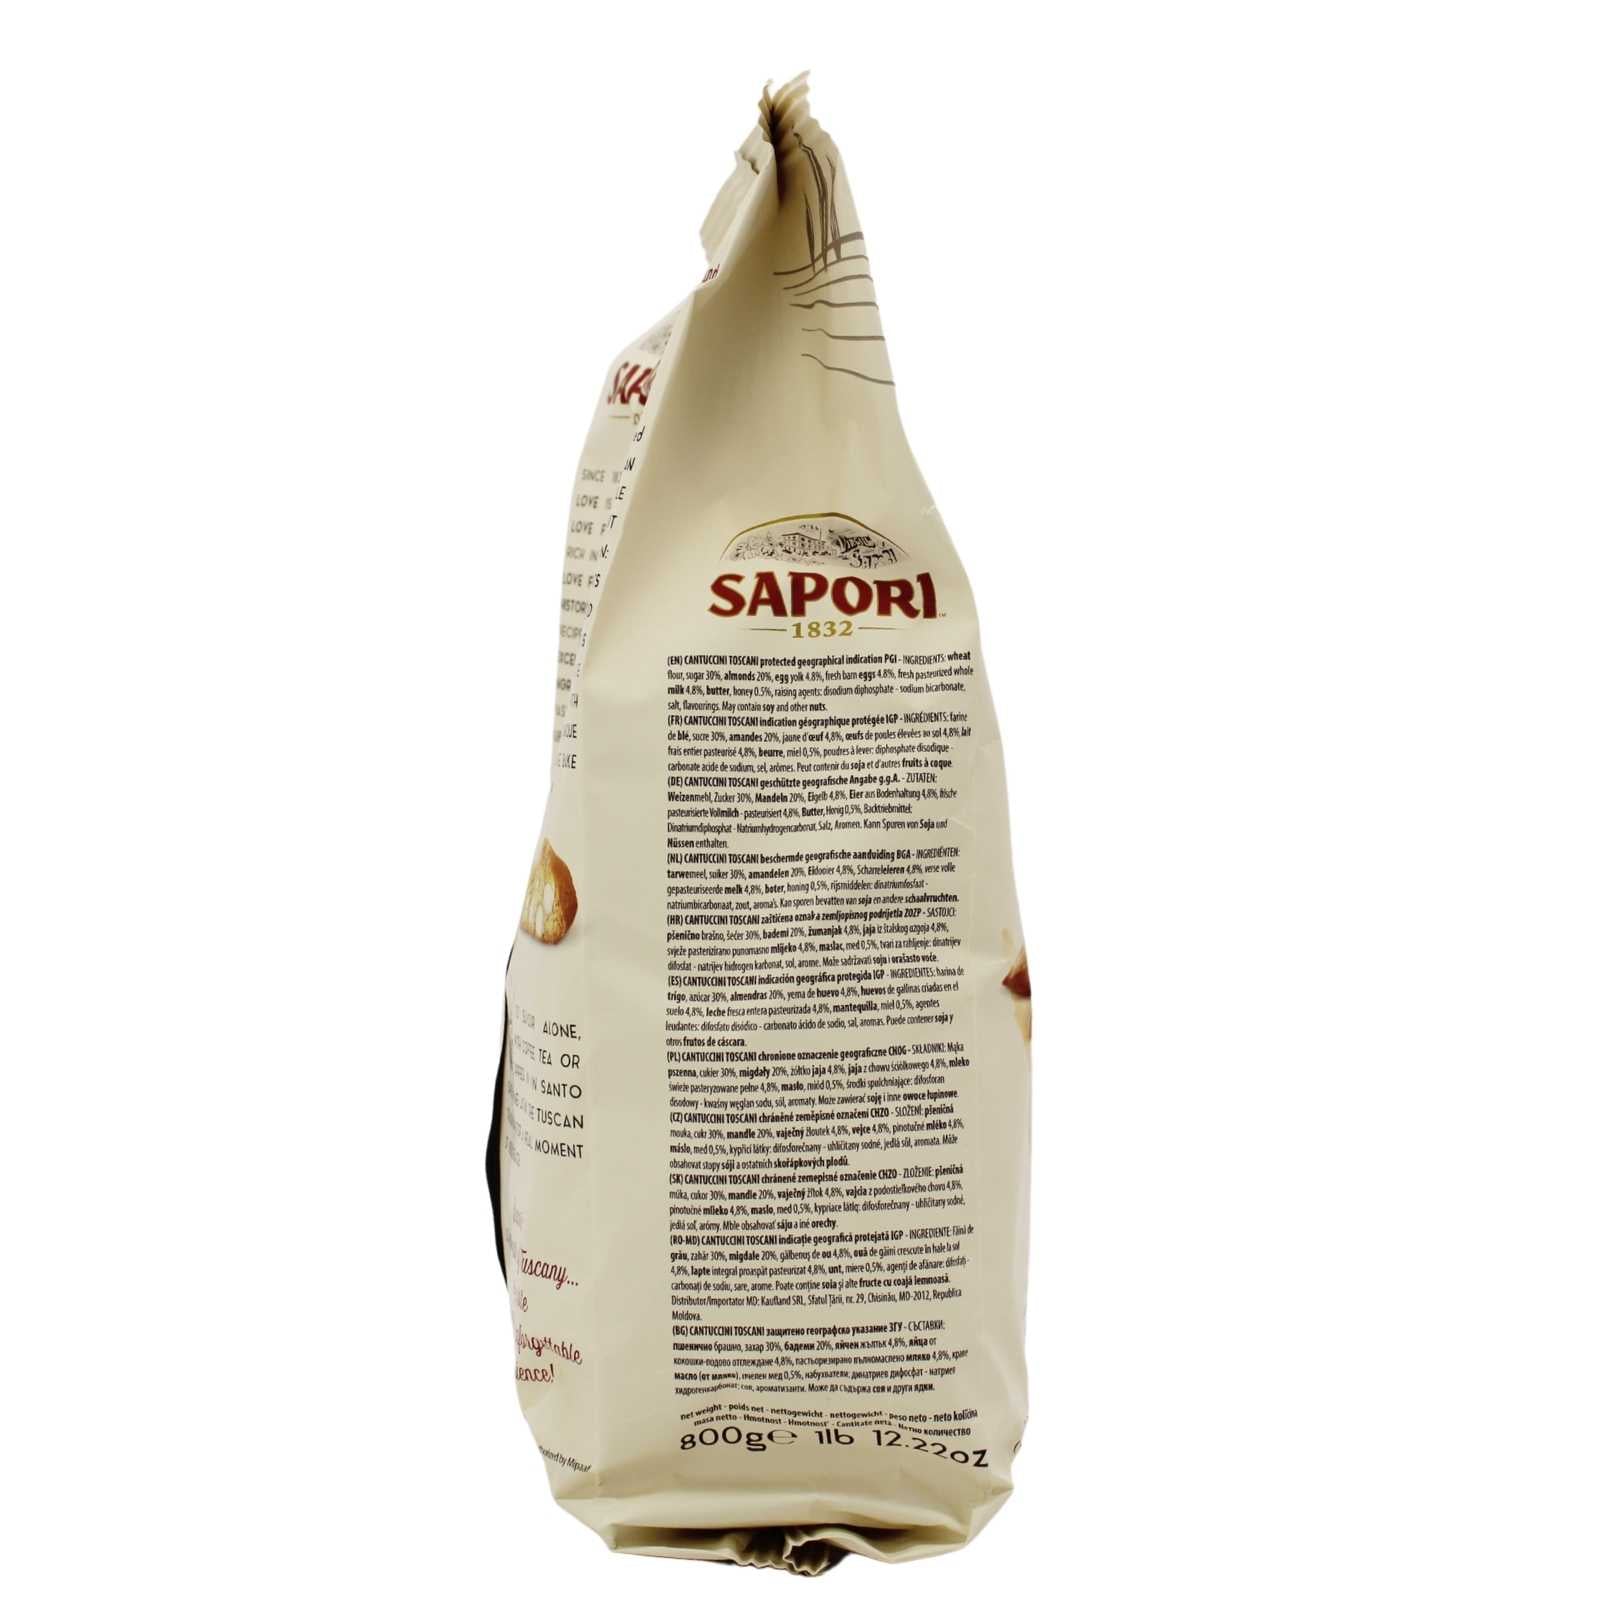 Sapori Cantuccini (Biscotti) information